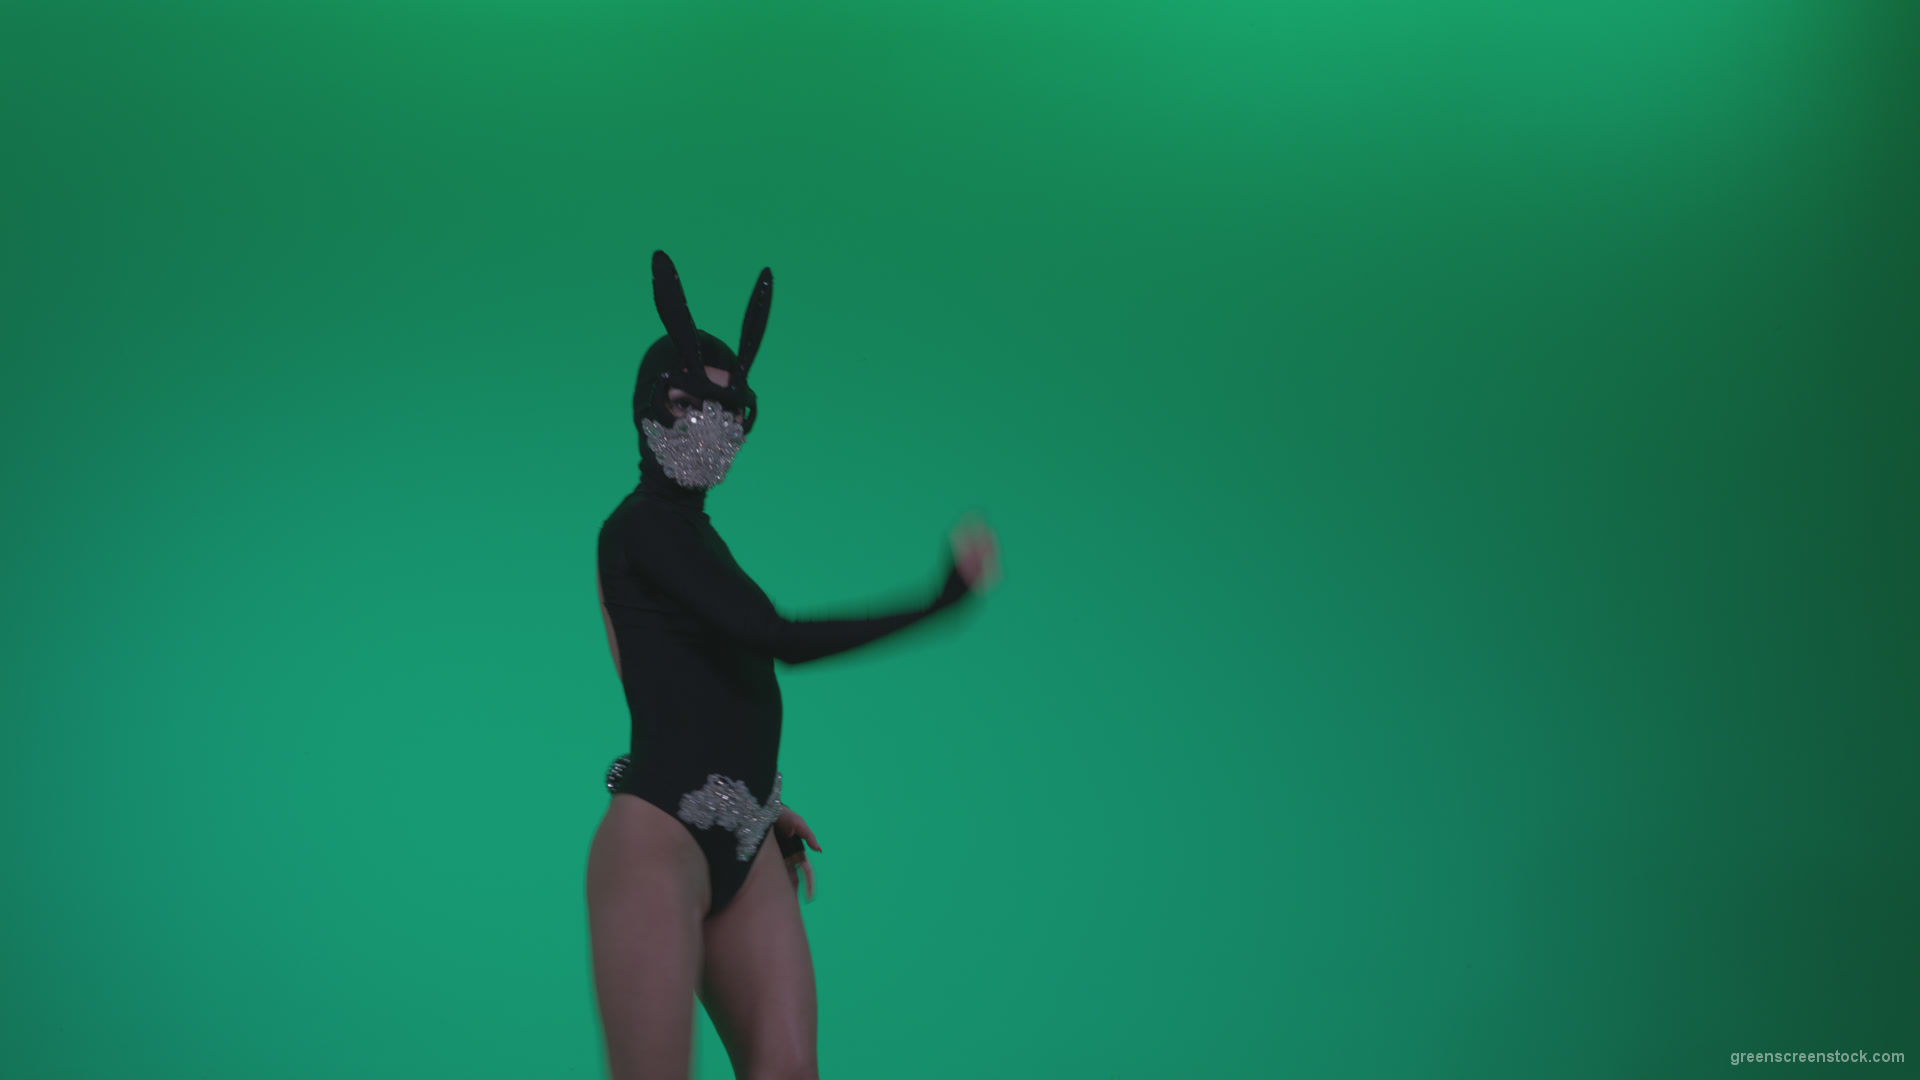 Go-go-Dancer-Black-Rabbit-u14-Green-Screen-Video-Footage_007 Green Screen Stock